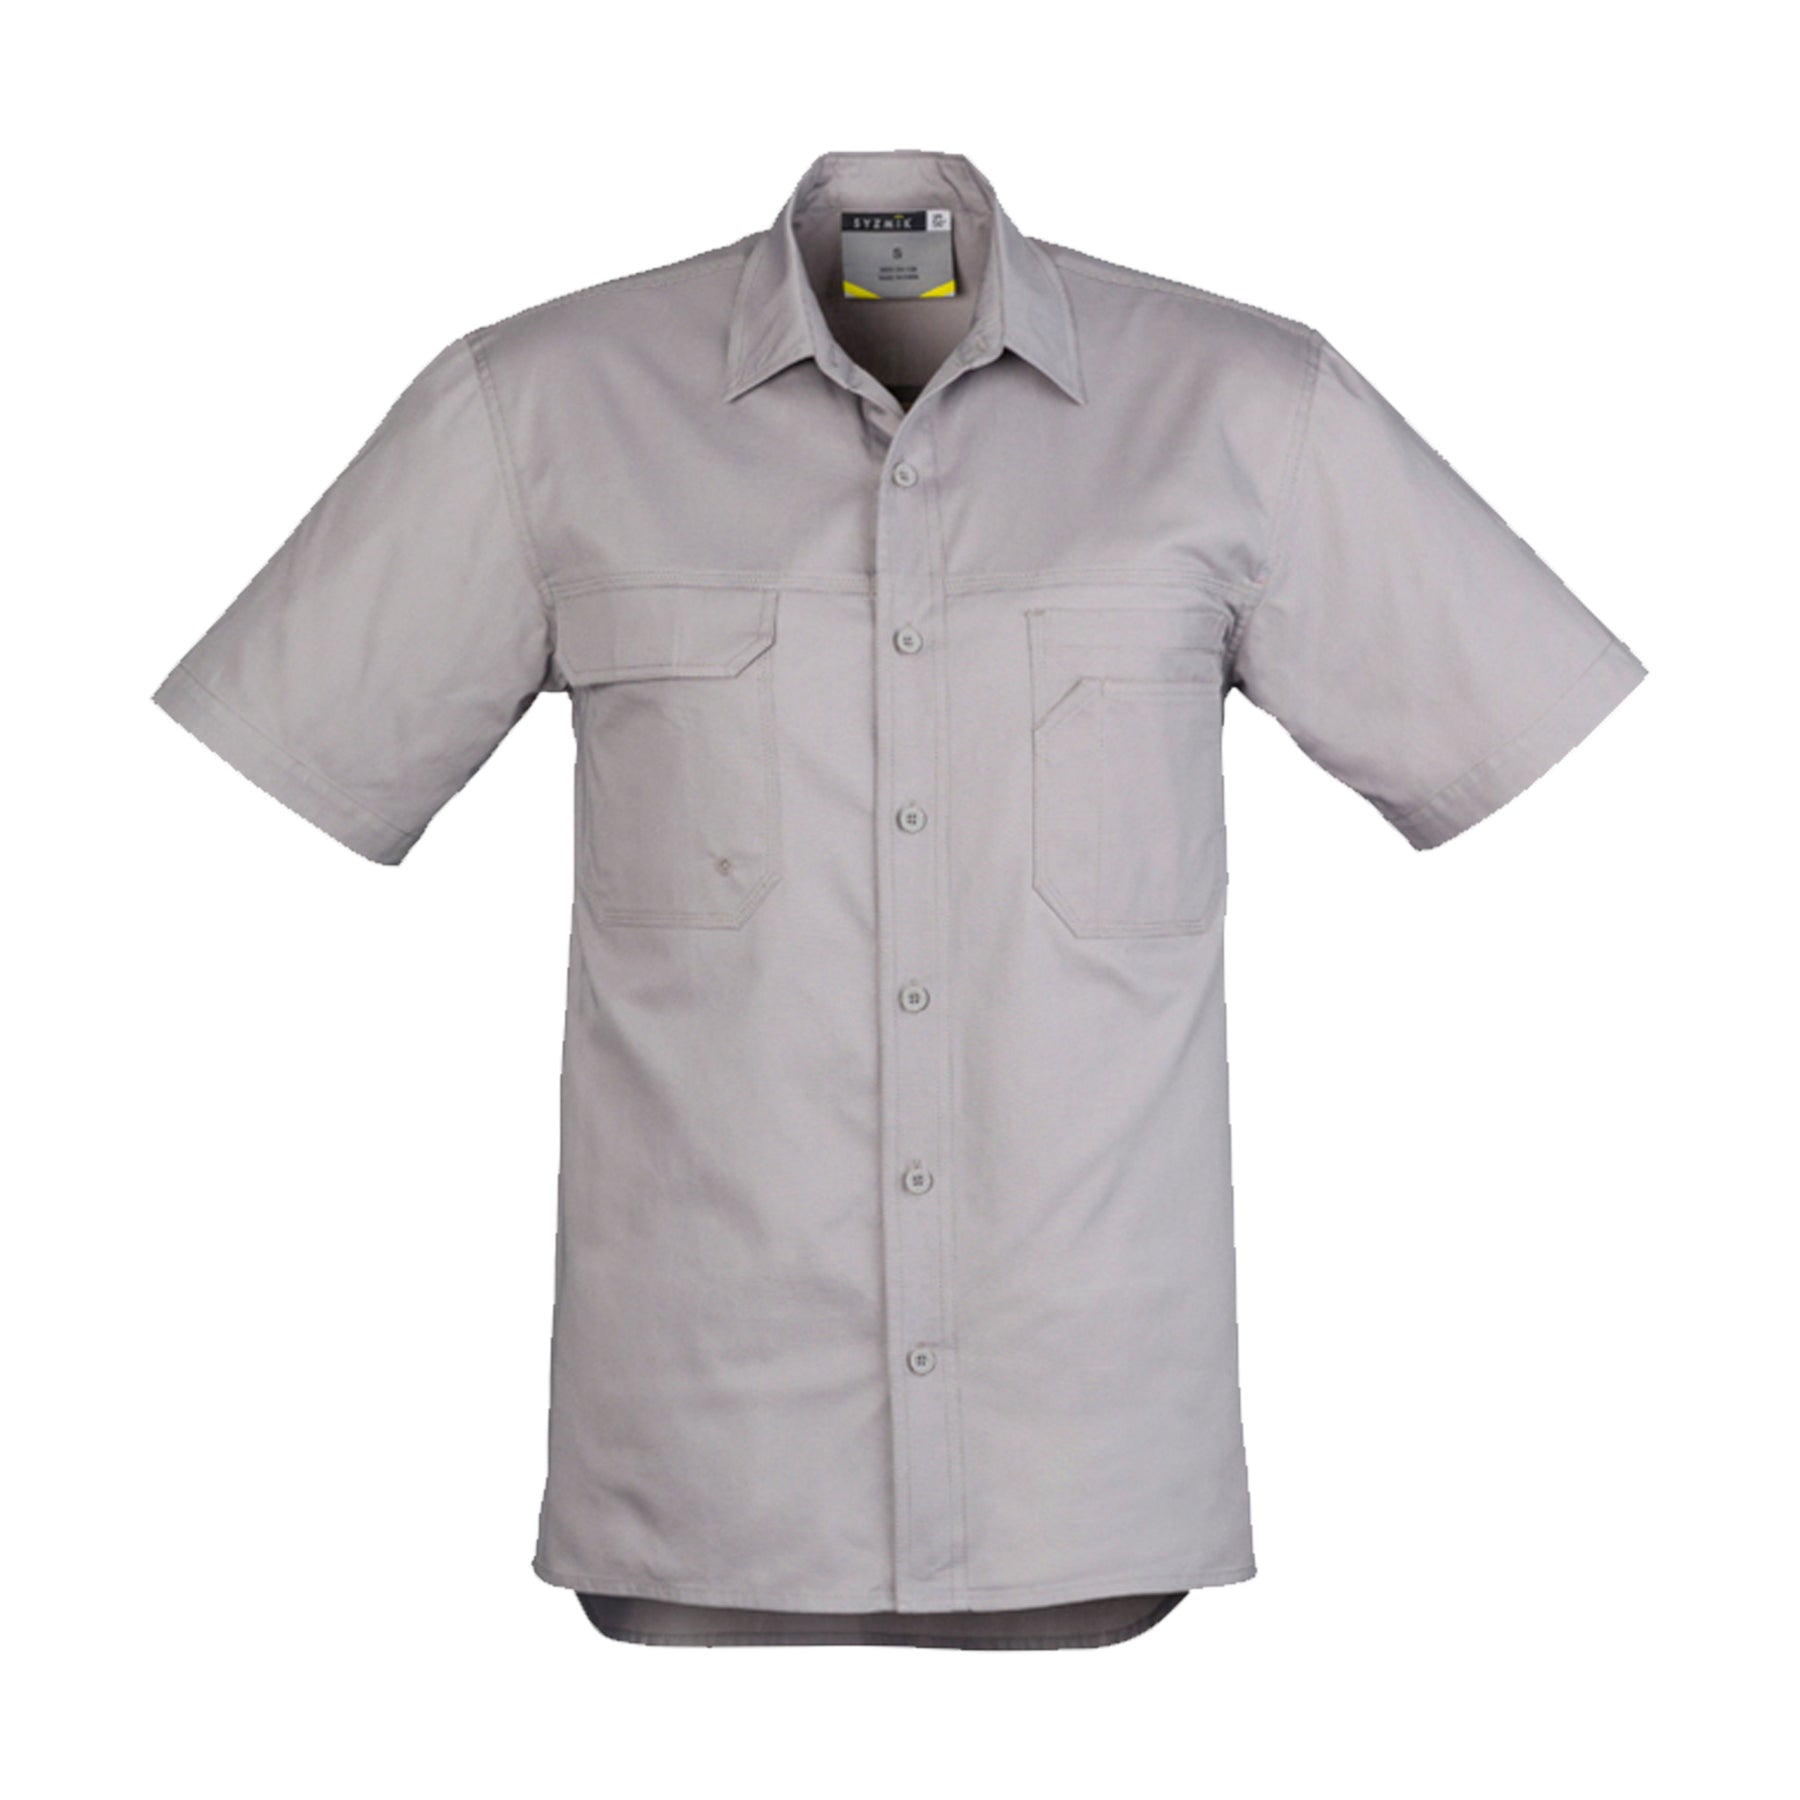 light weight short sleeve tradie shirt in grey